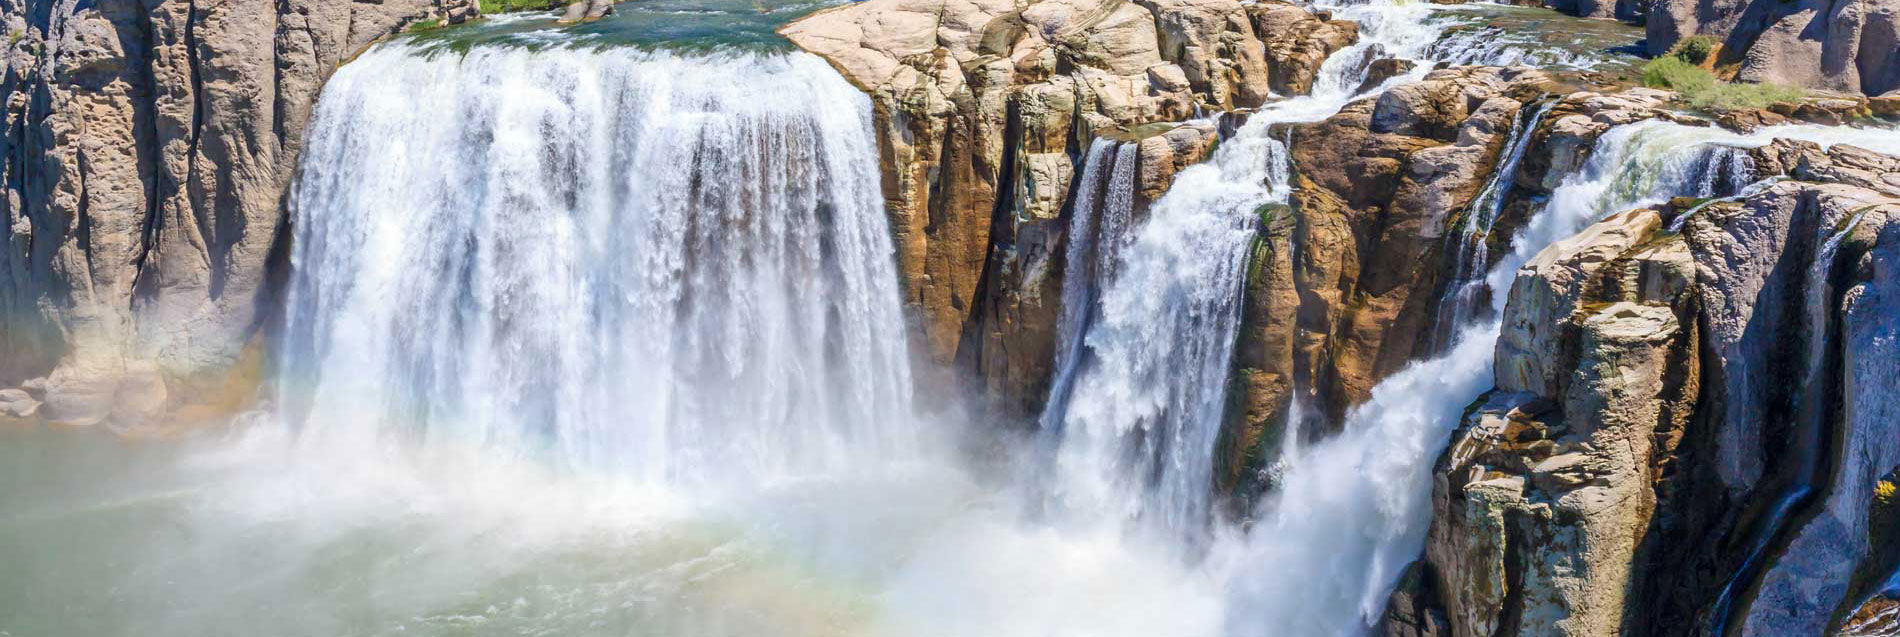 three waterfalls from twin falls idaho